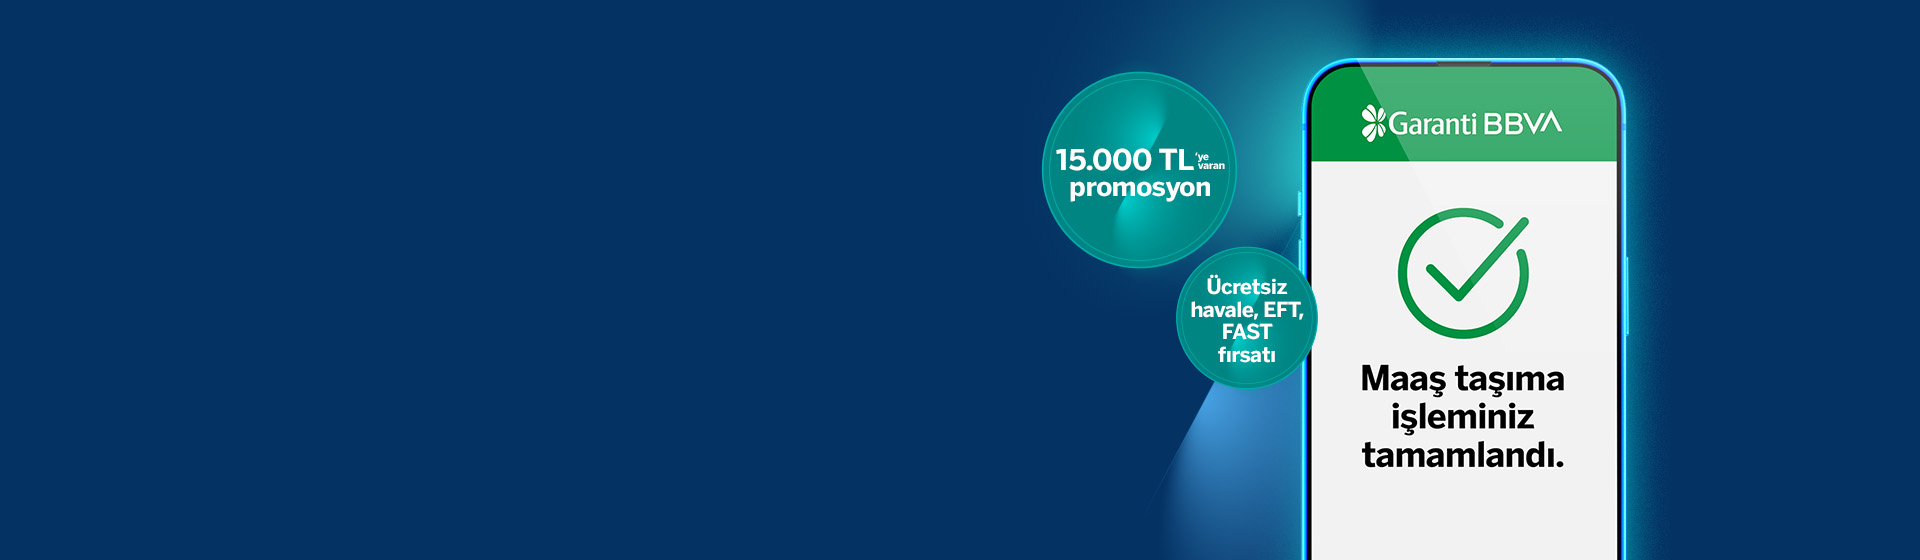 Emekli maaşını Garanti BBVA’dan alanlara 15.000 TL’ye varan promosyon!